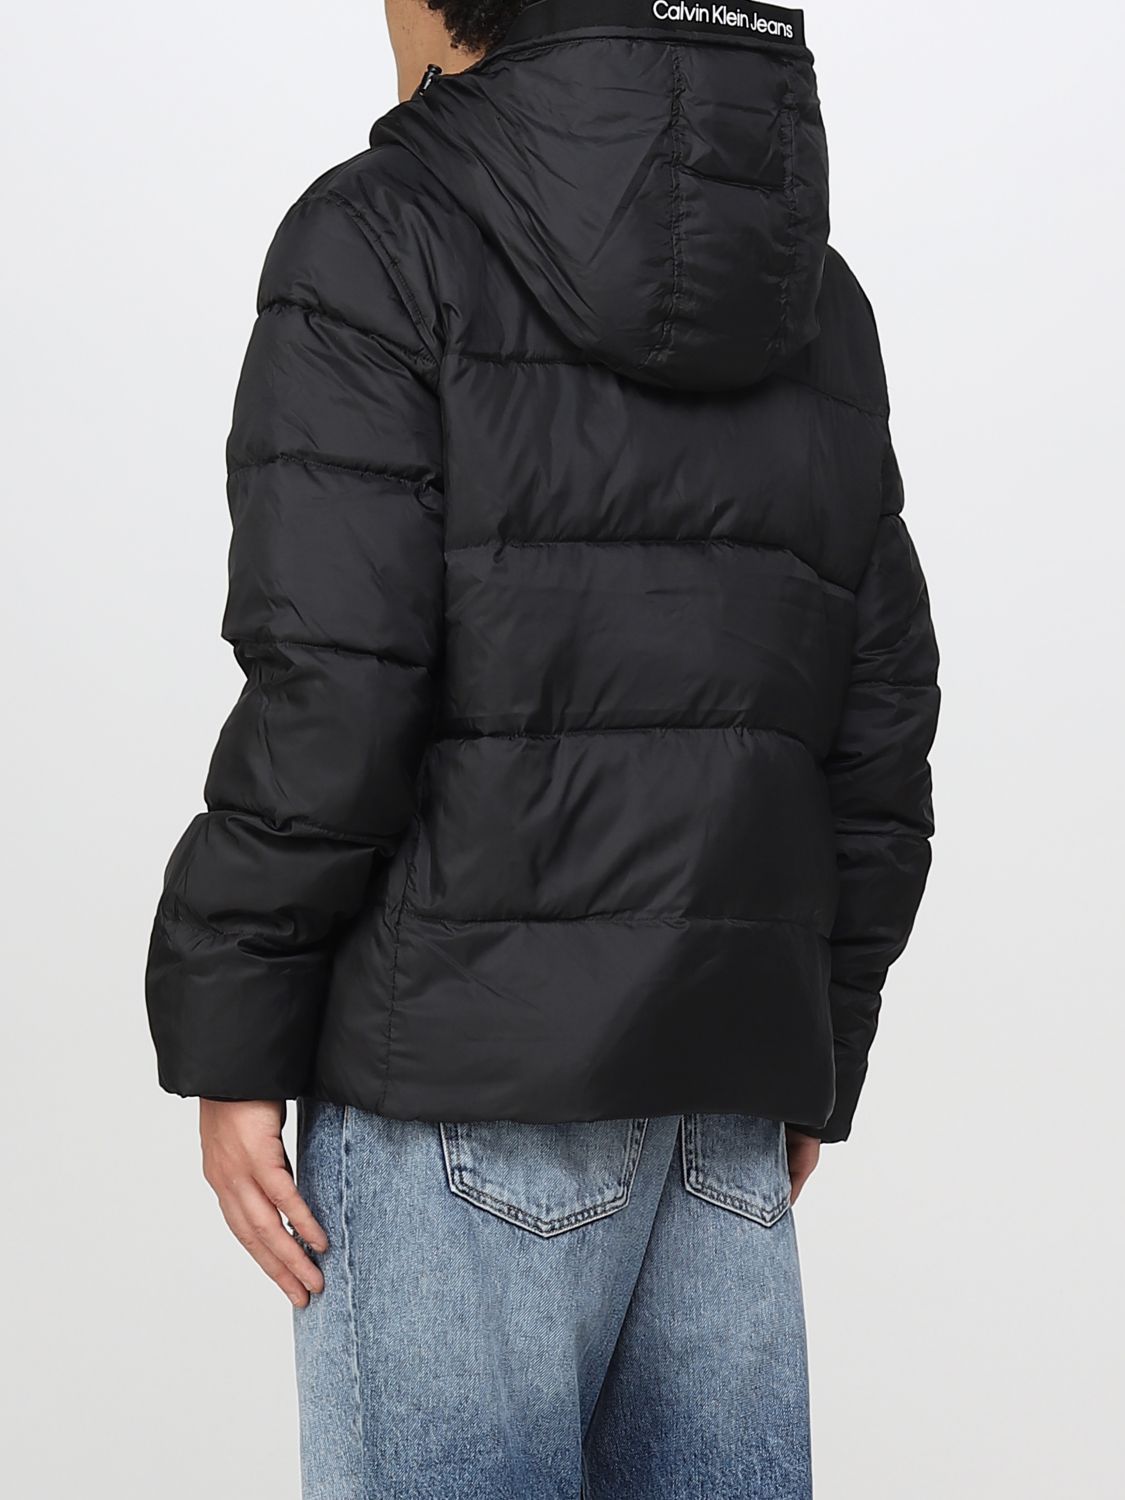 CALVIN KLEIN JEANS: men's jacket - Black | Calvin Klein Jeans jacket ...